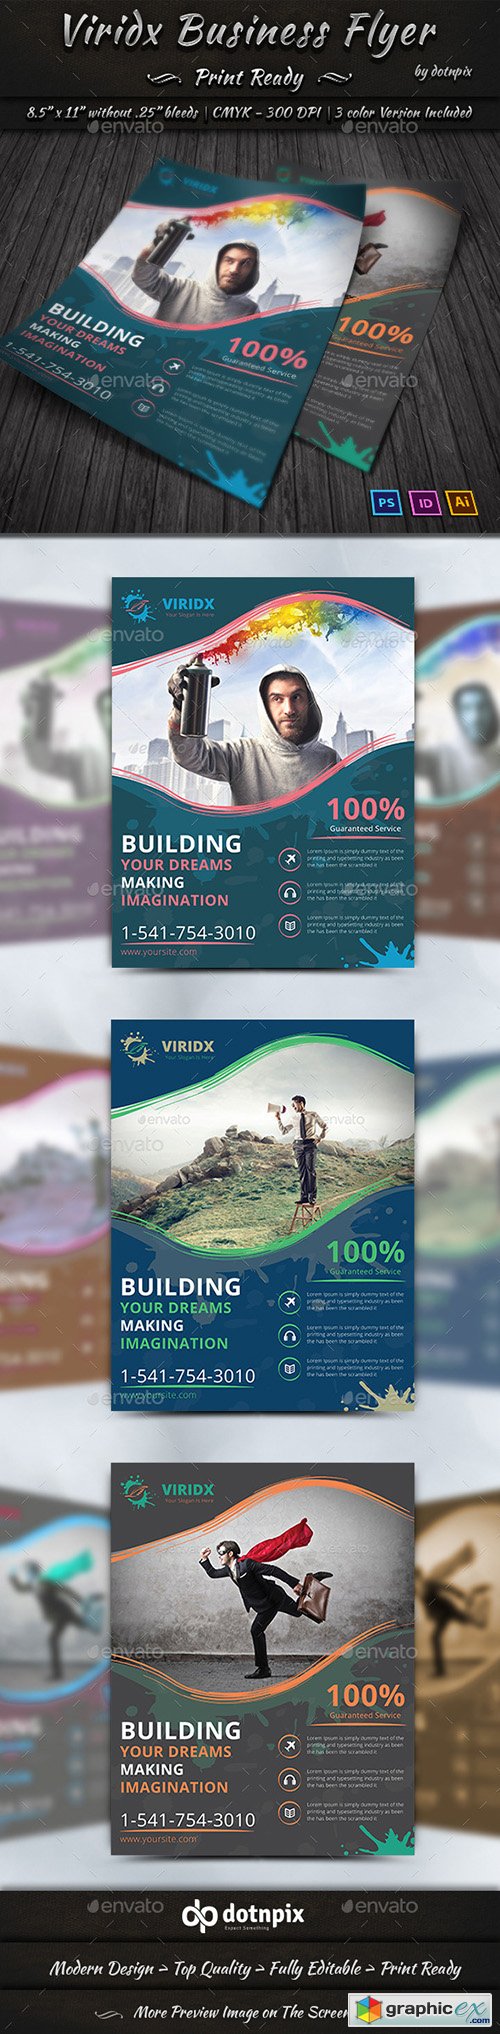 Viridx Business Flyer